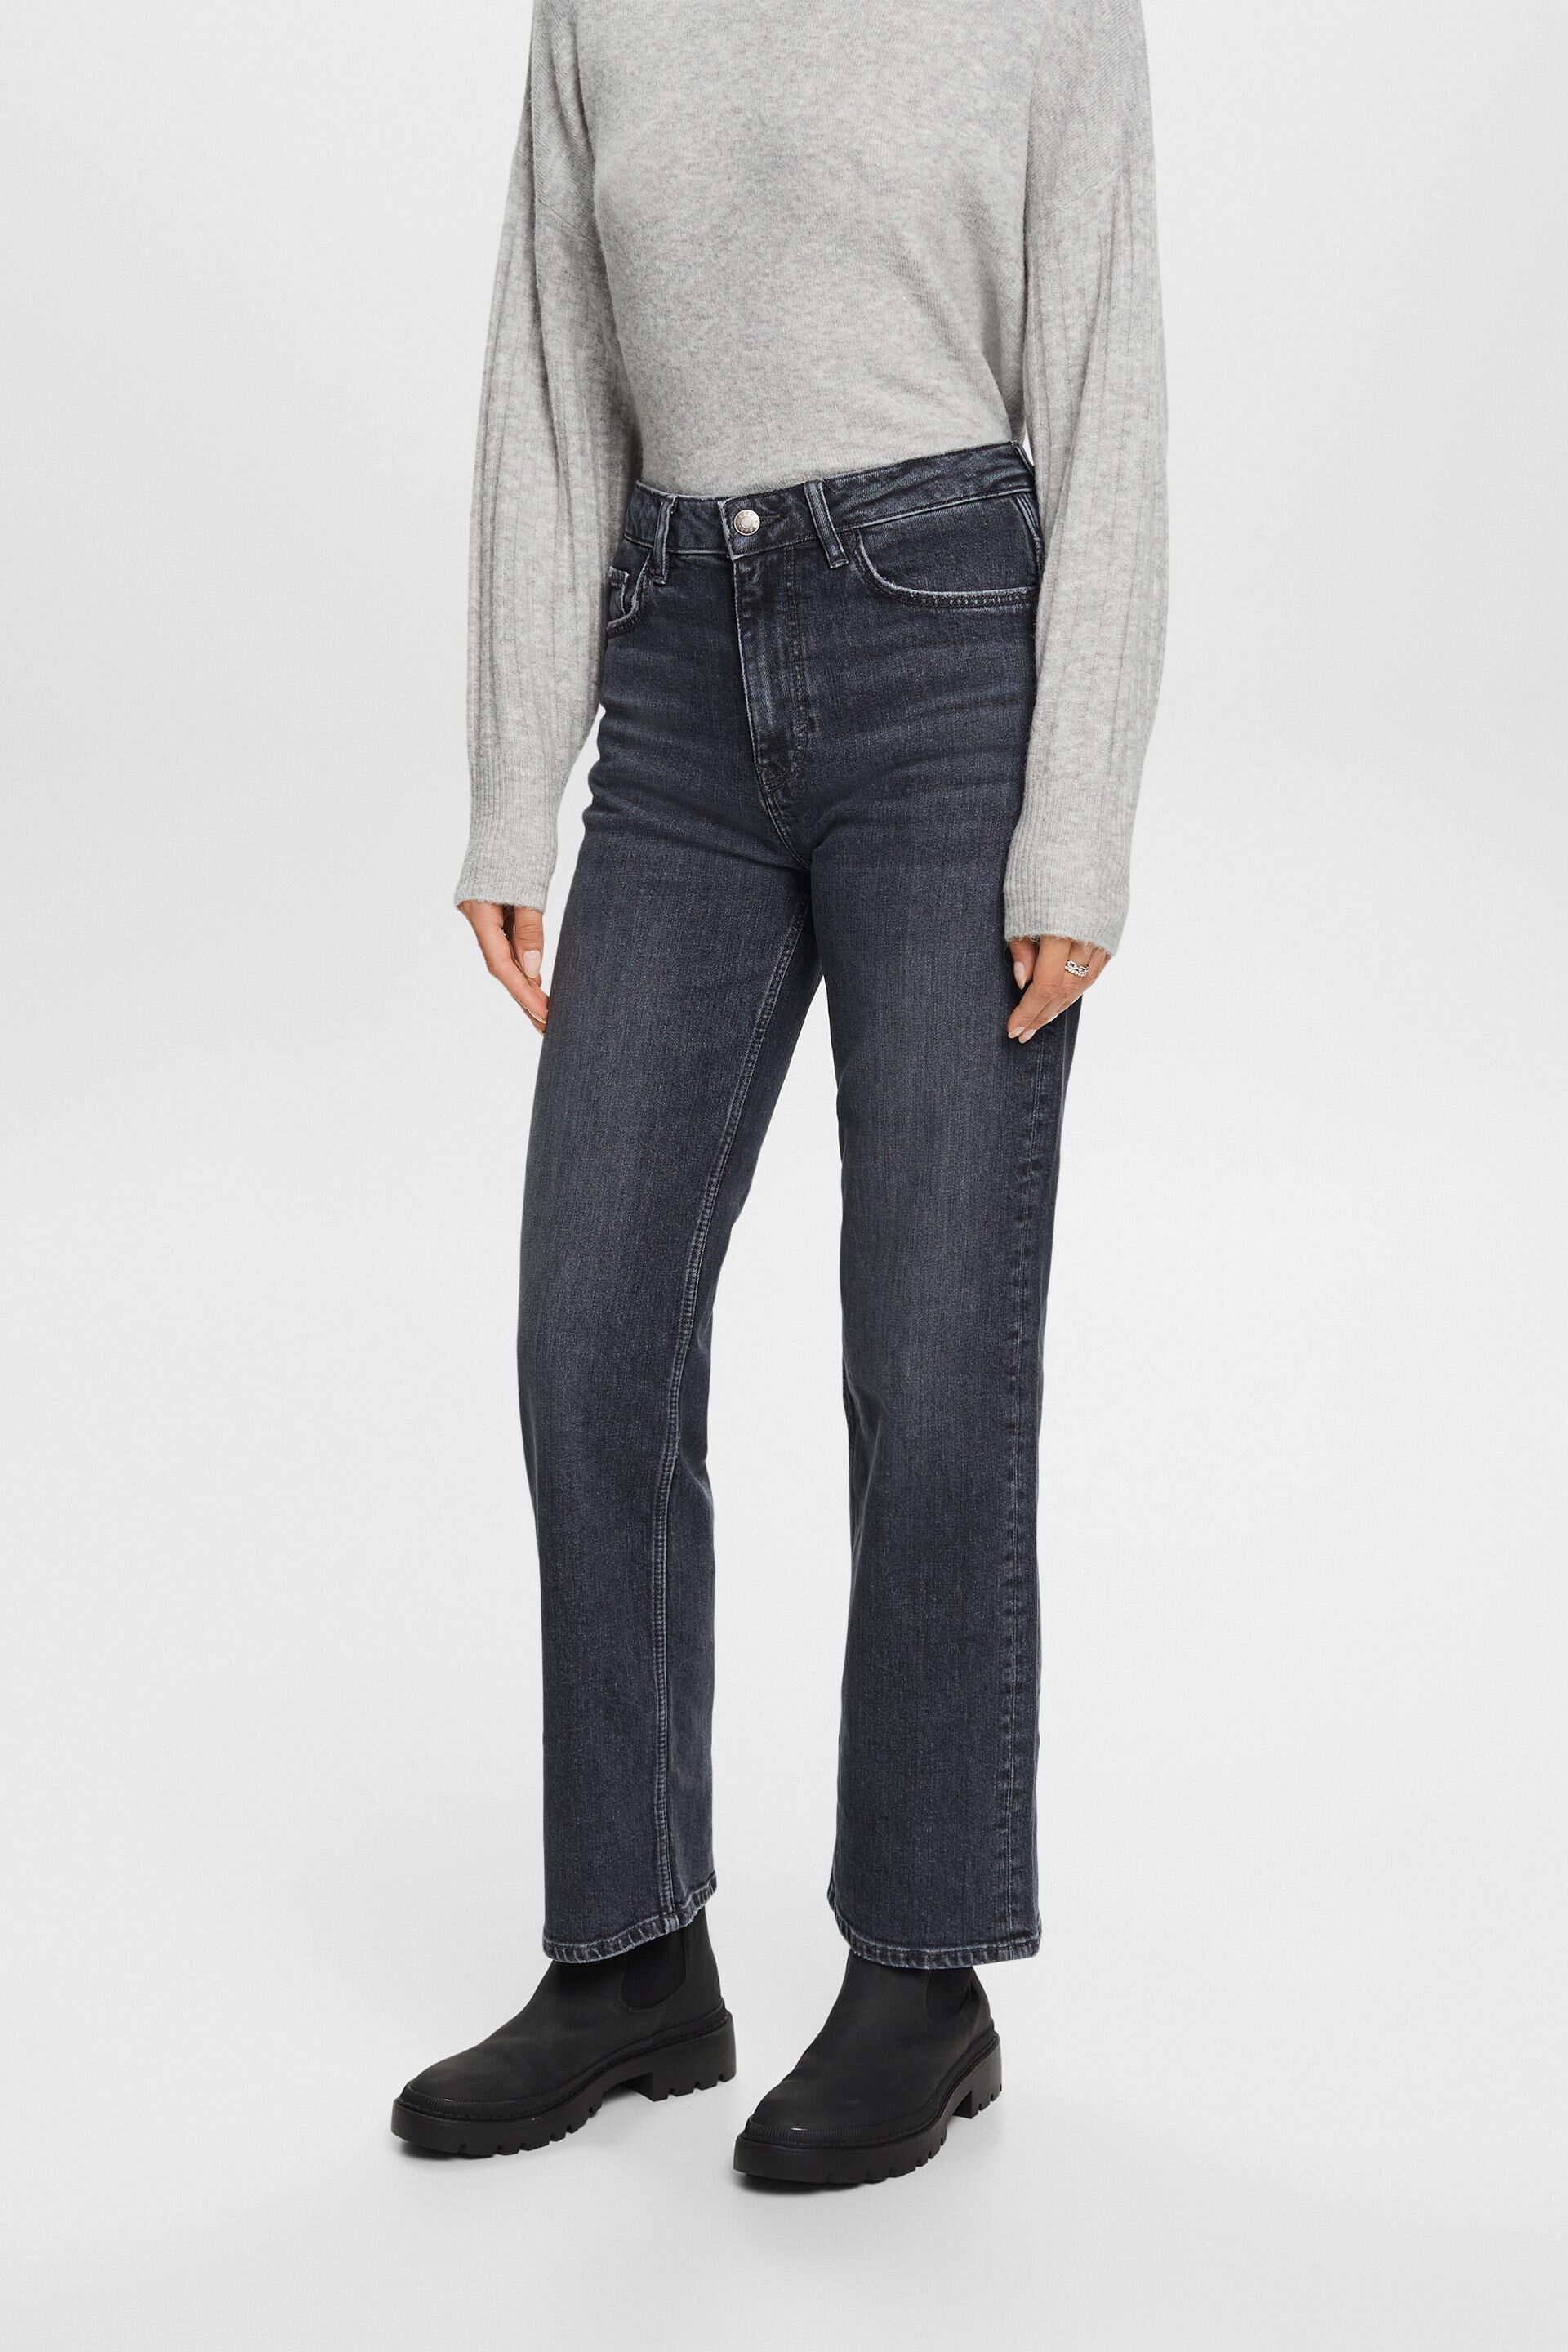 Knöchellange Straight-Fit-Jeans im Stil der 80er